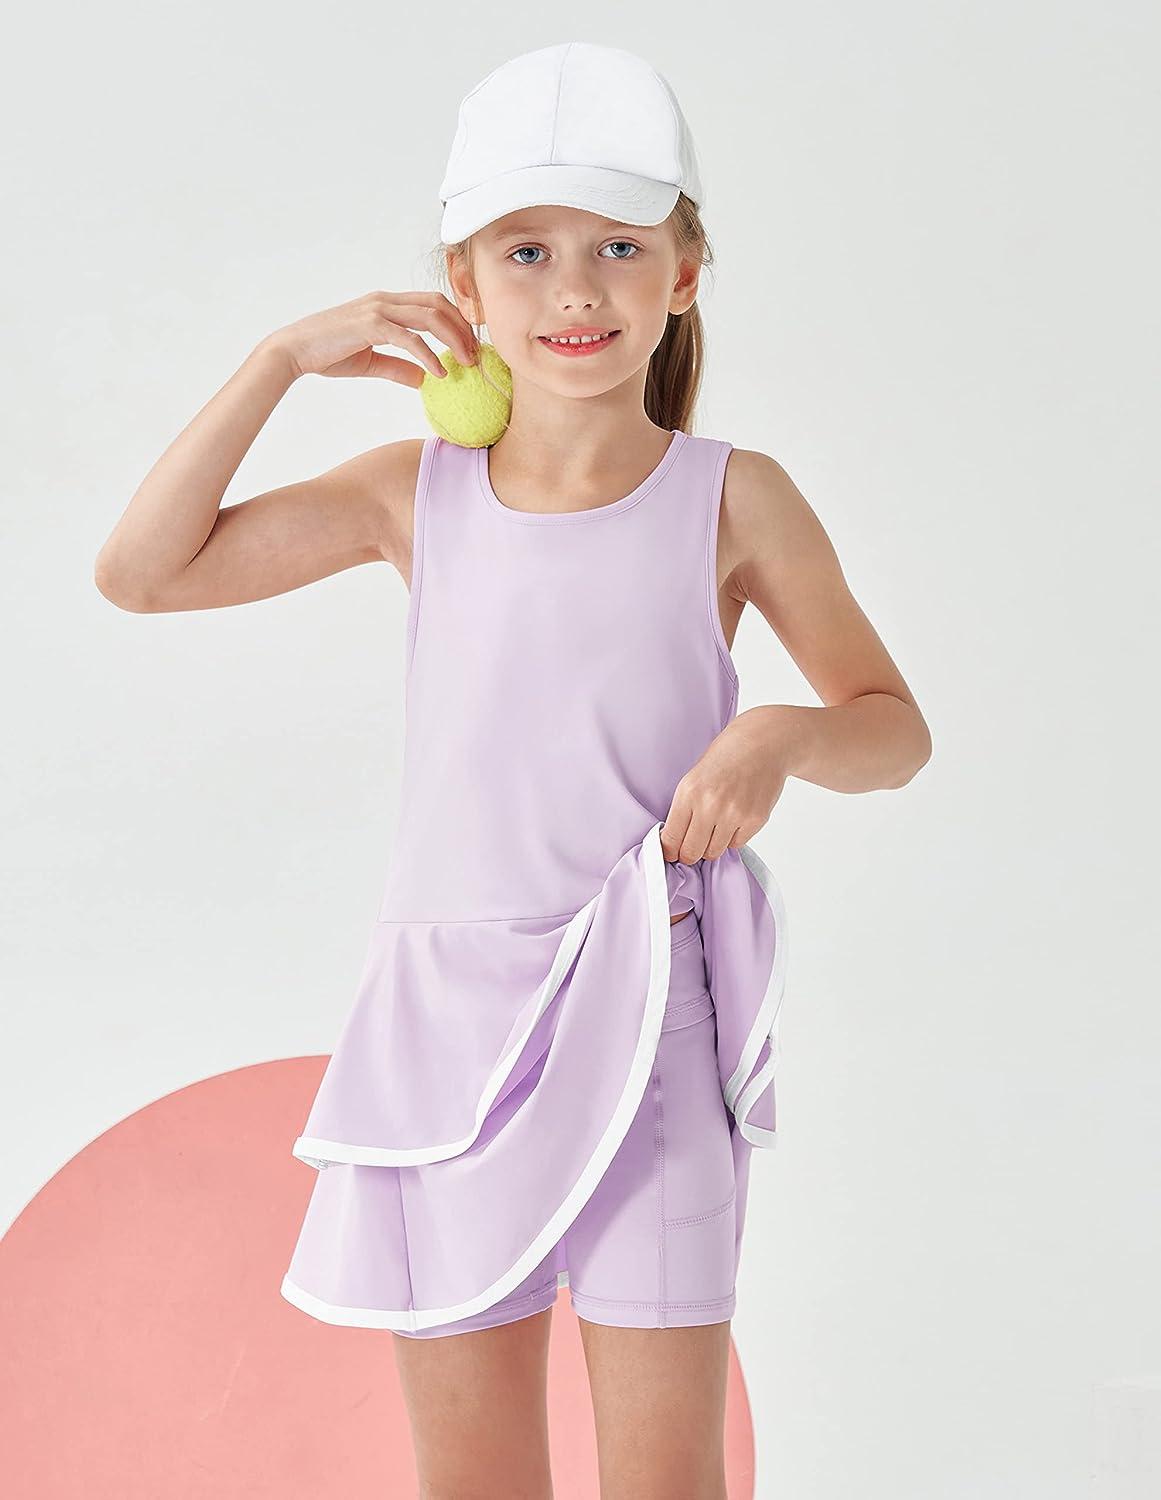  JACK SMITH Girls Tennis Dress with Short Sleeveless